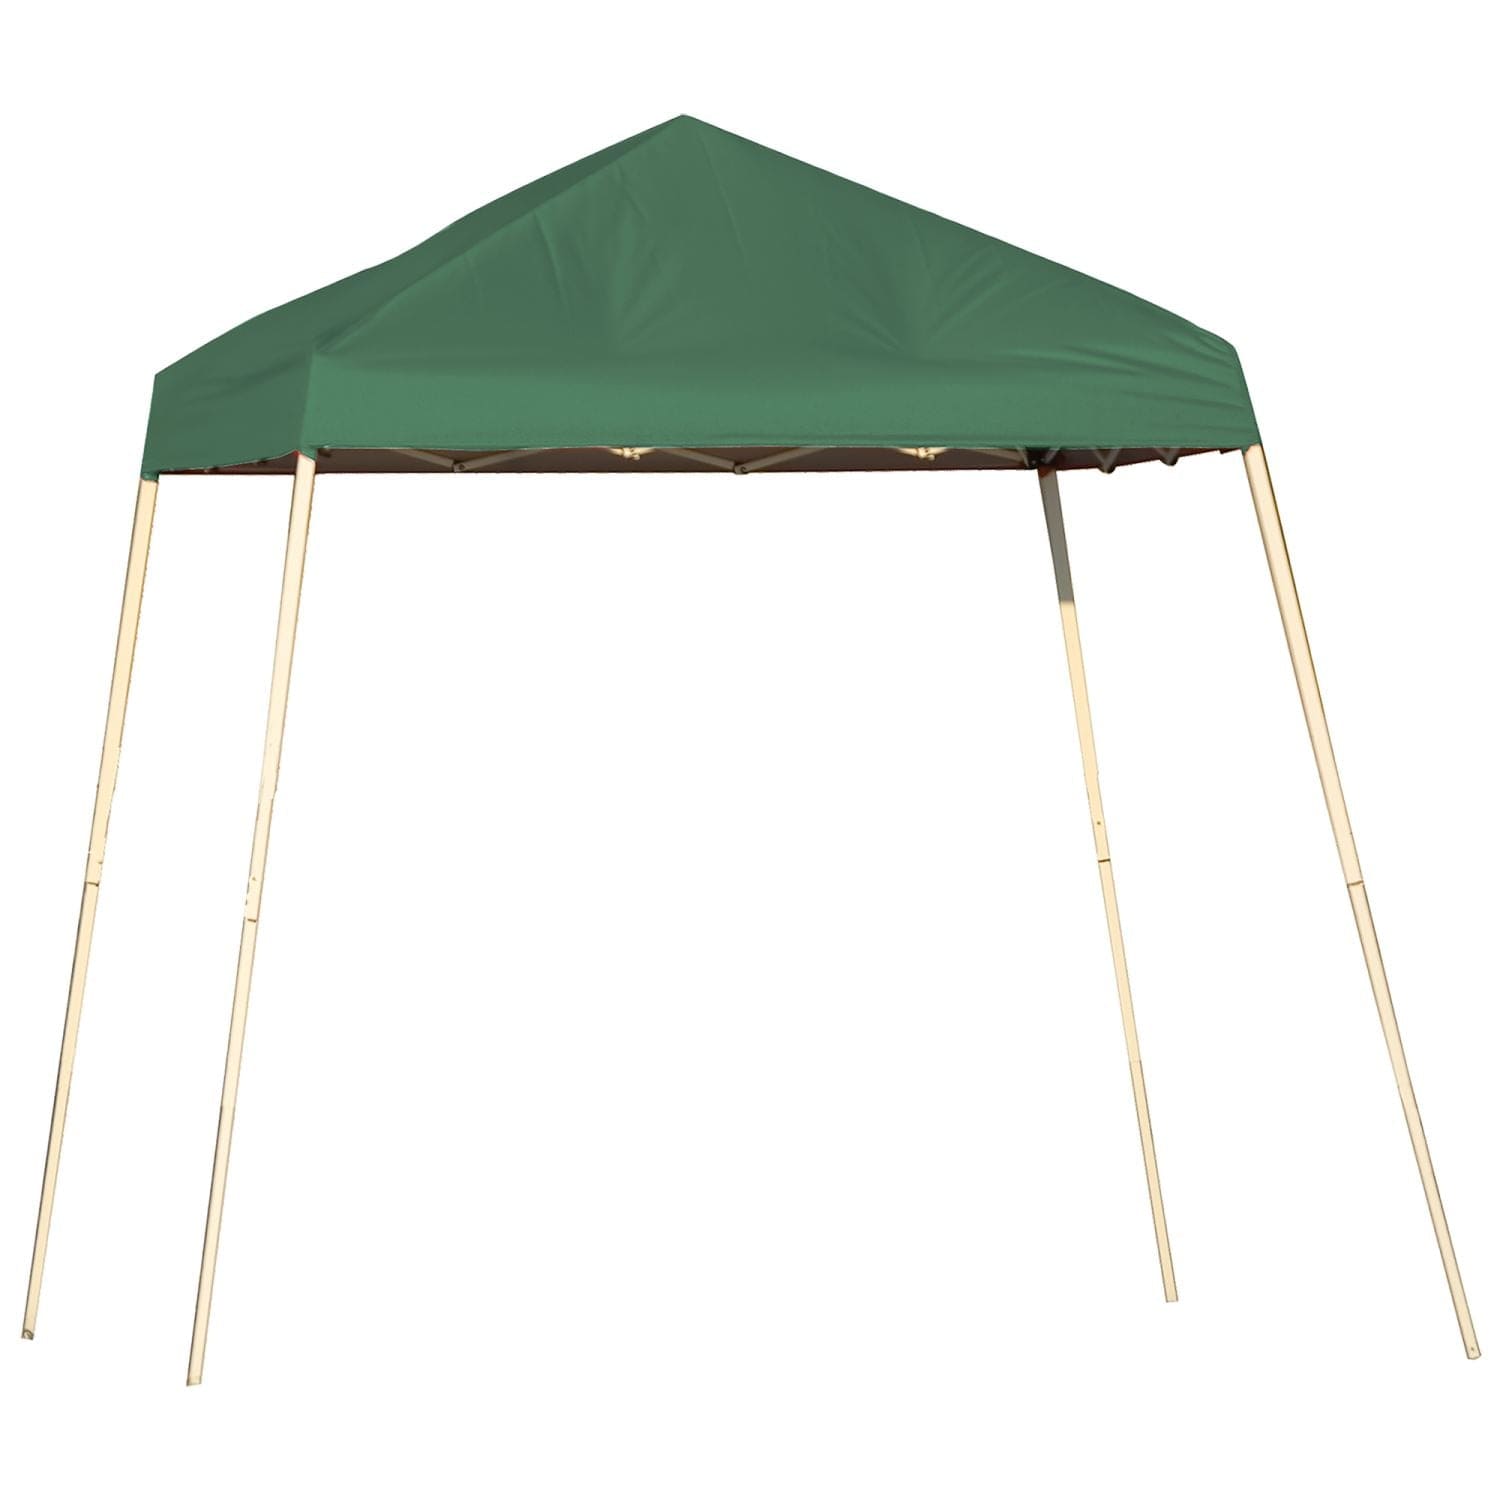 ShelterLogic Pop-Up Canopies ShelterLogic | Pop-Up Canopy HD - Slant Leg 8 x 8 ft. Green 22572